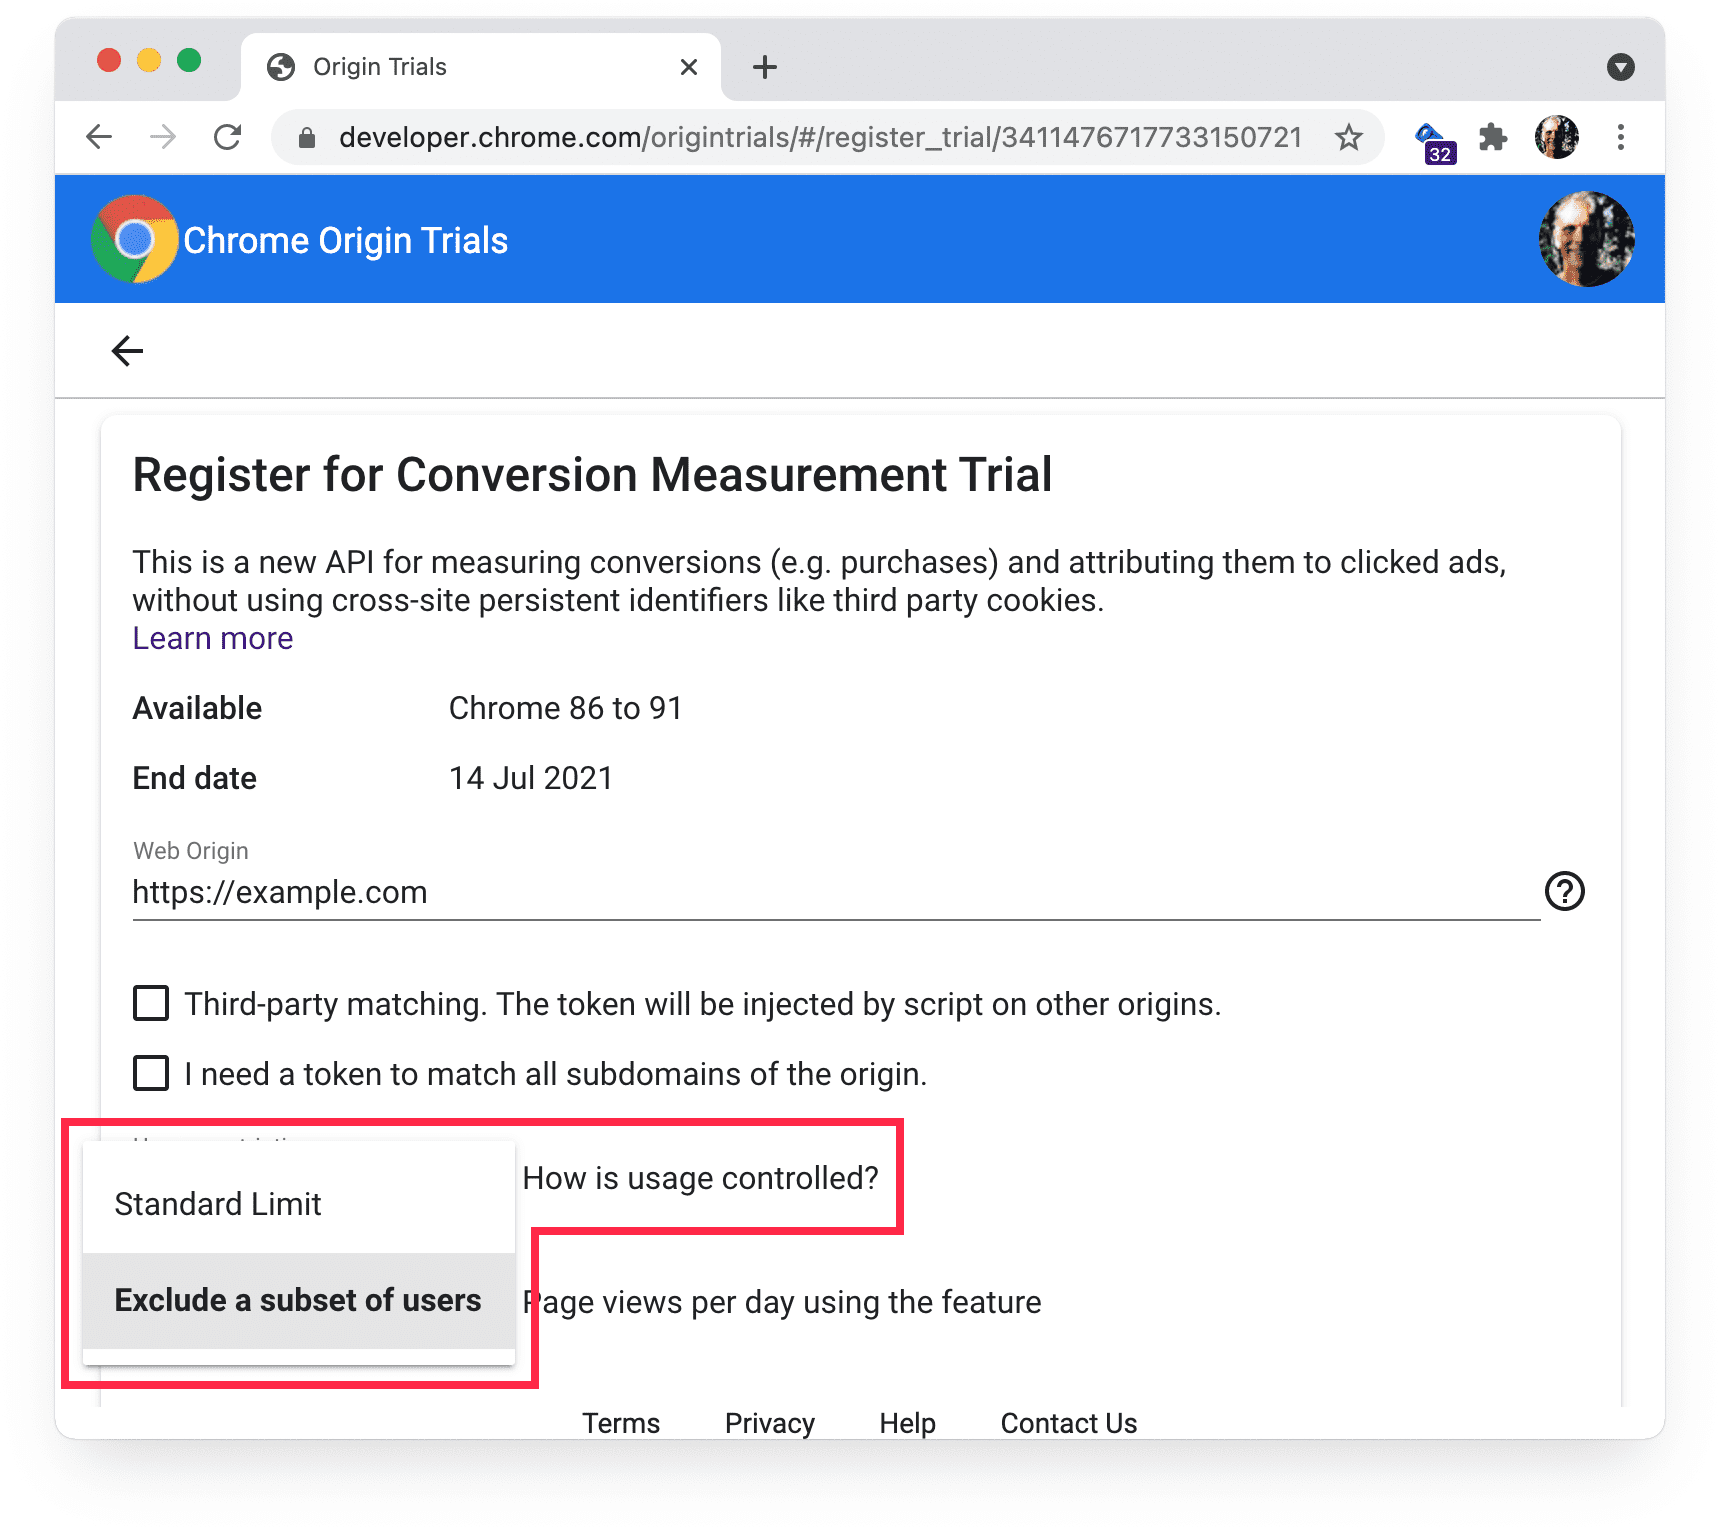 Chrome origin trials 
registration page showing usage restrictions.